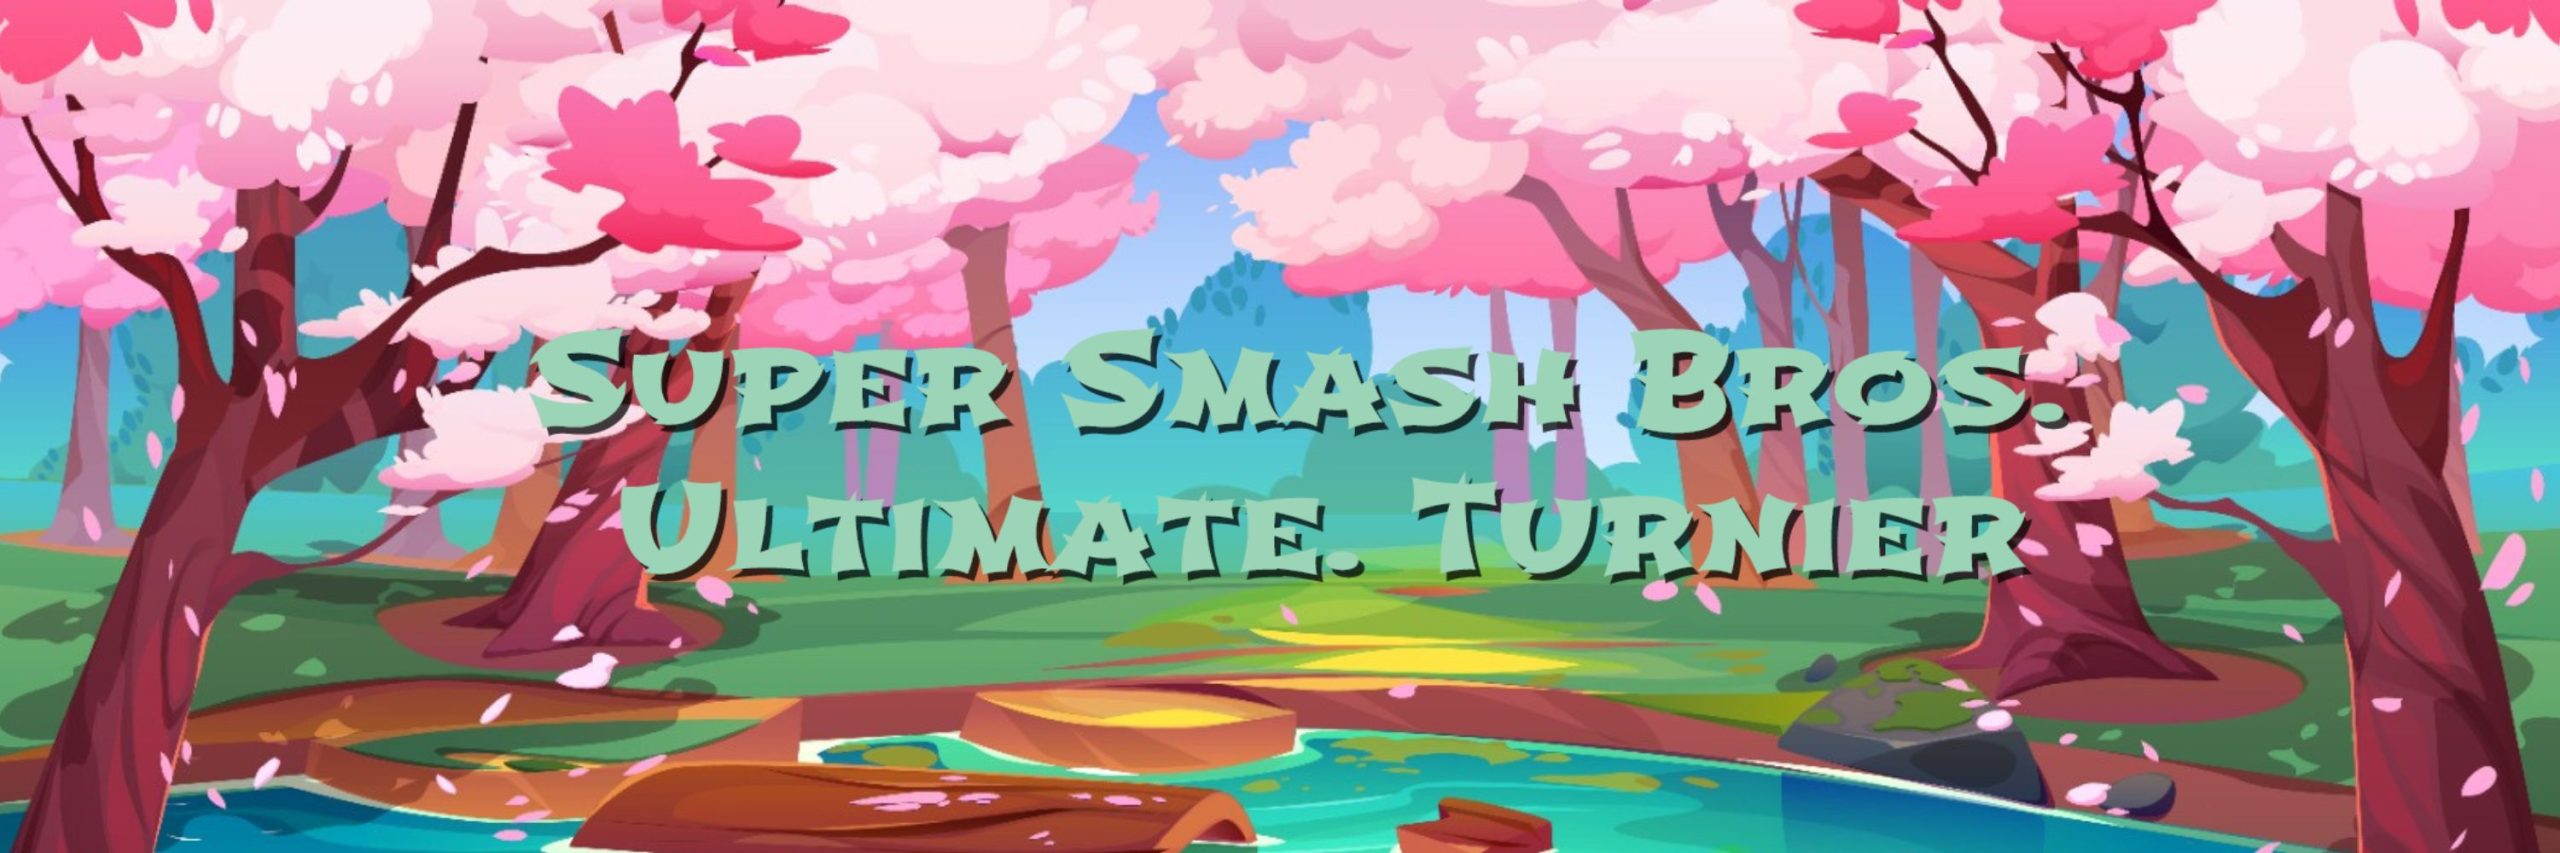 Super Smash Bros. Ultimate. Turnier